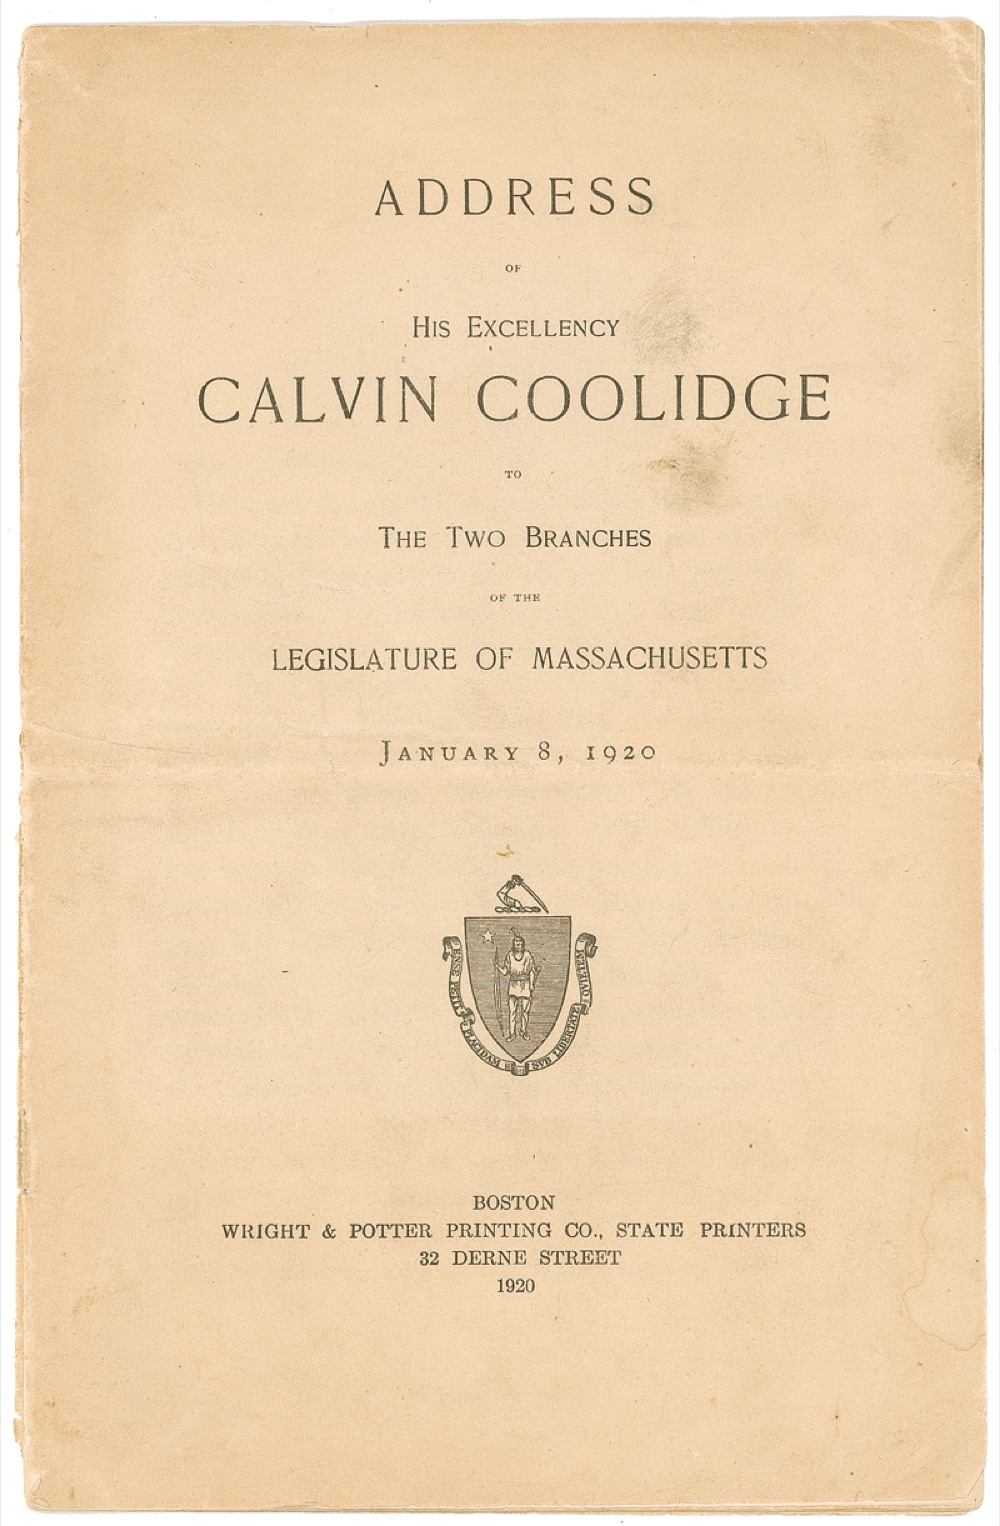 Lot #37 Calvin Coolidge